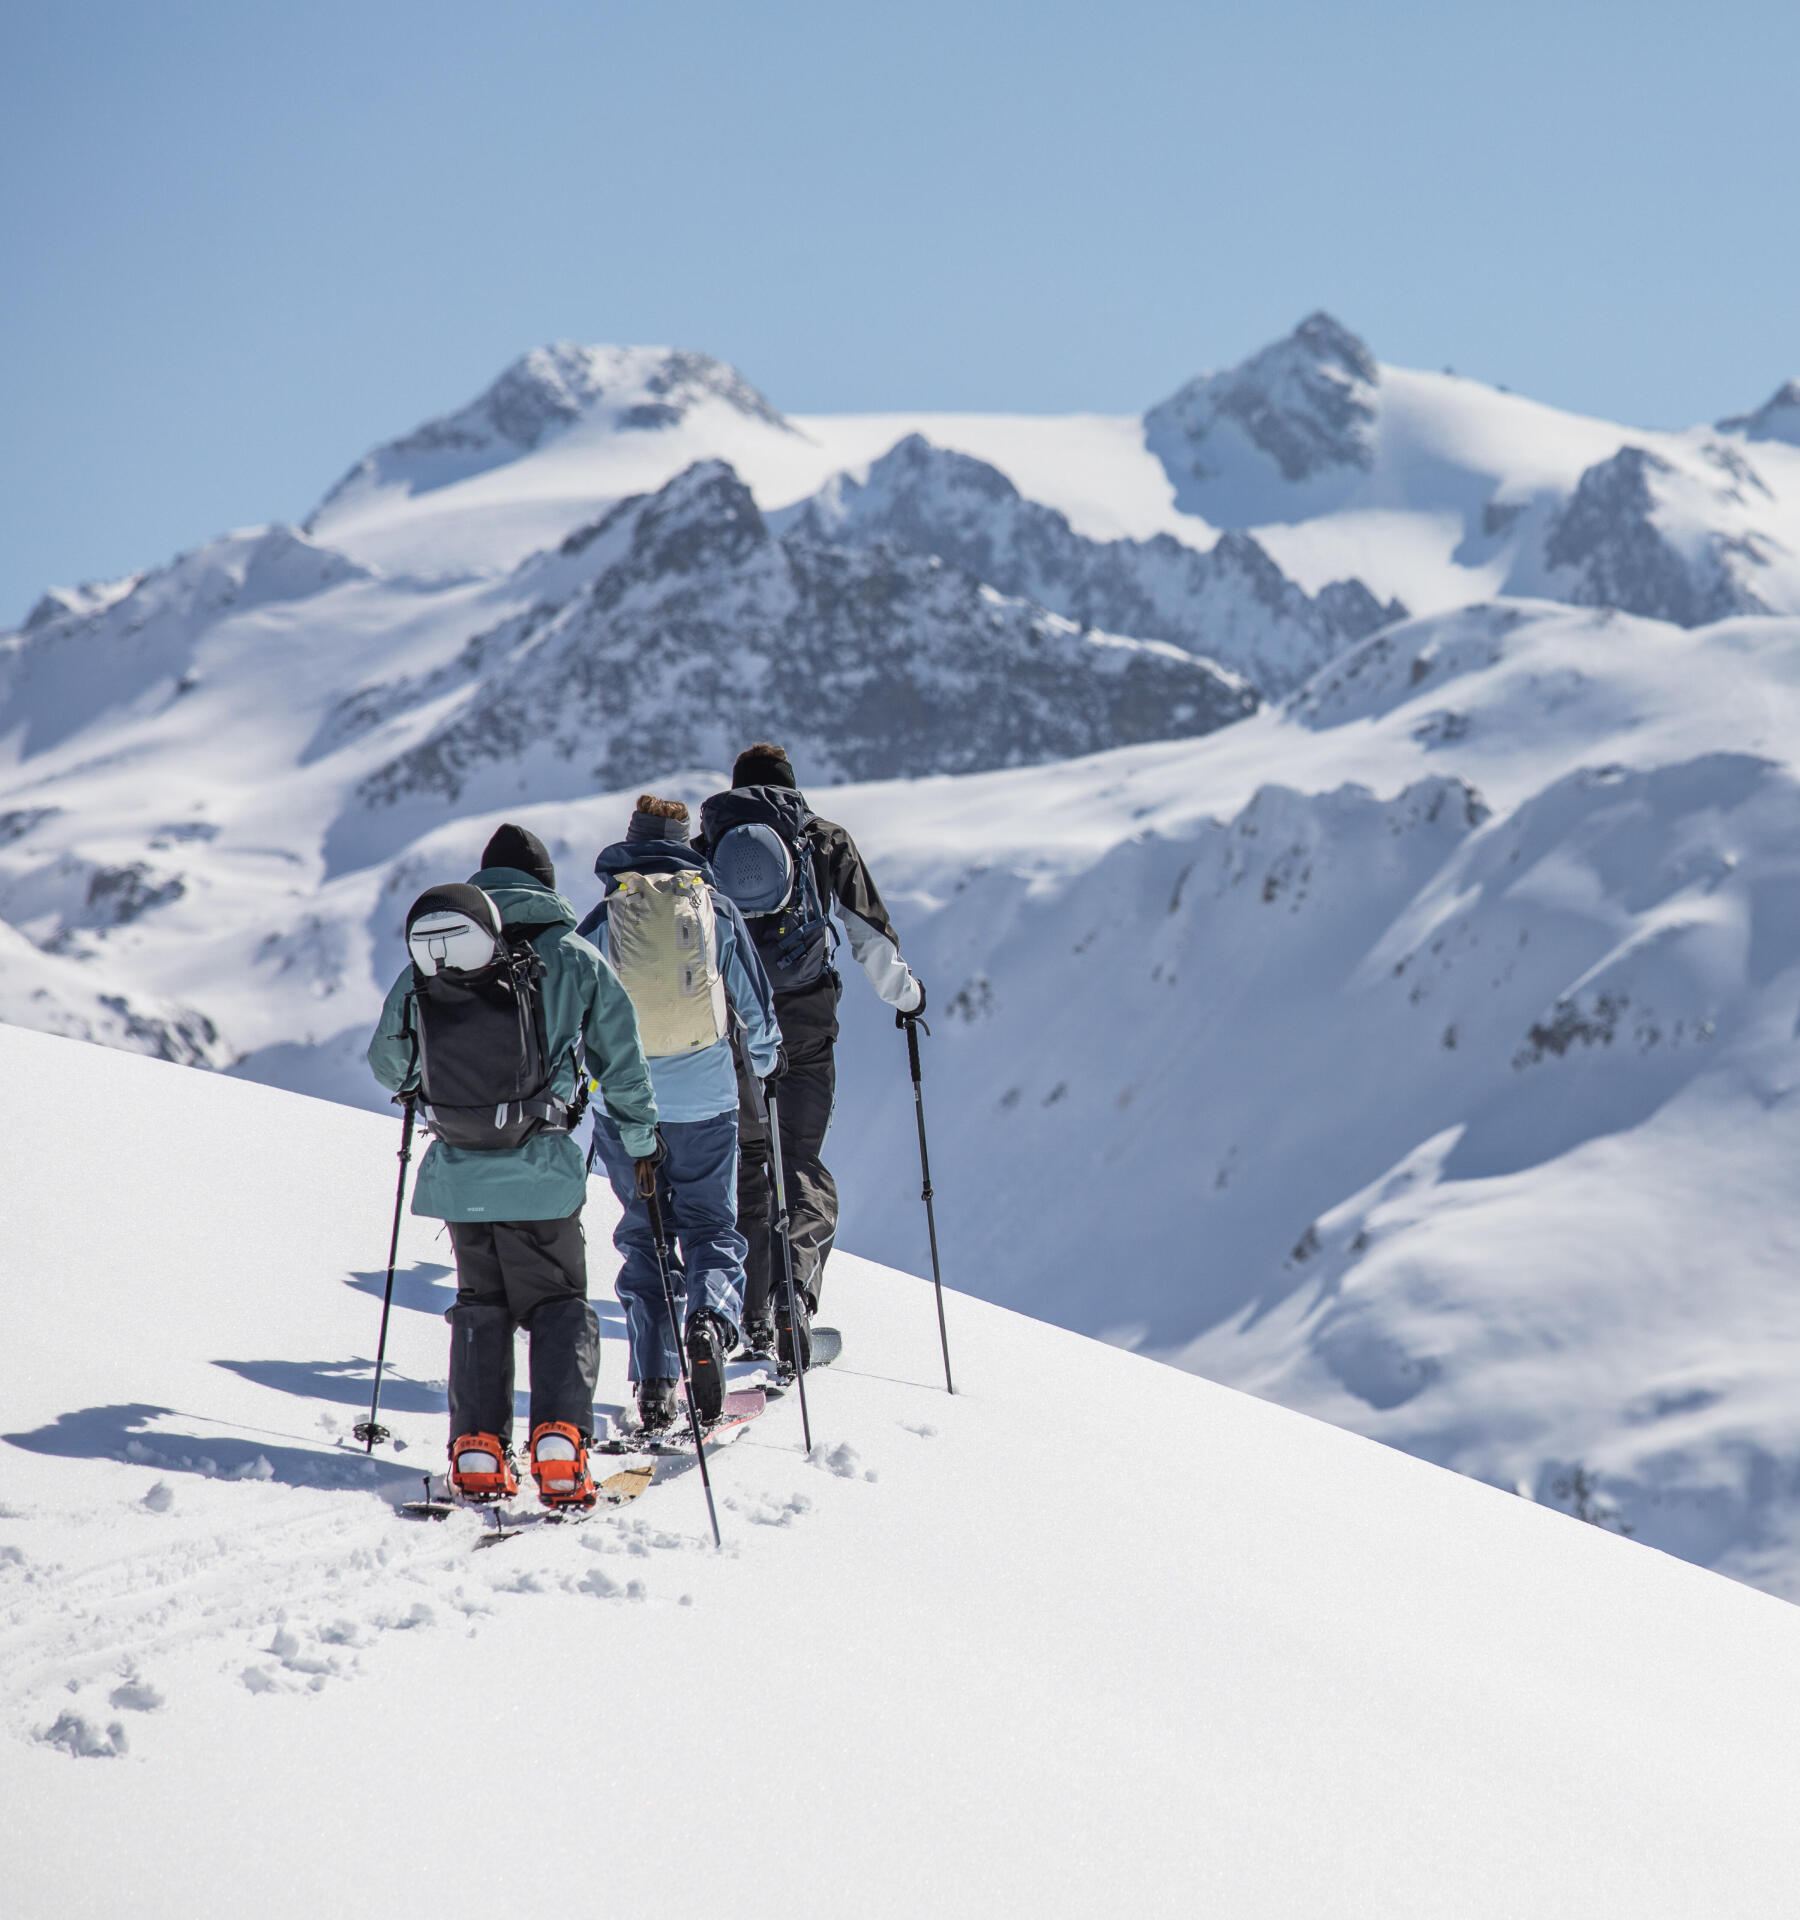 How to choose your ski touring bindings